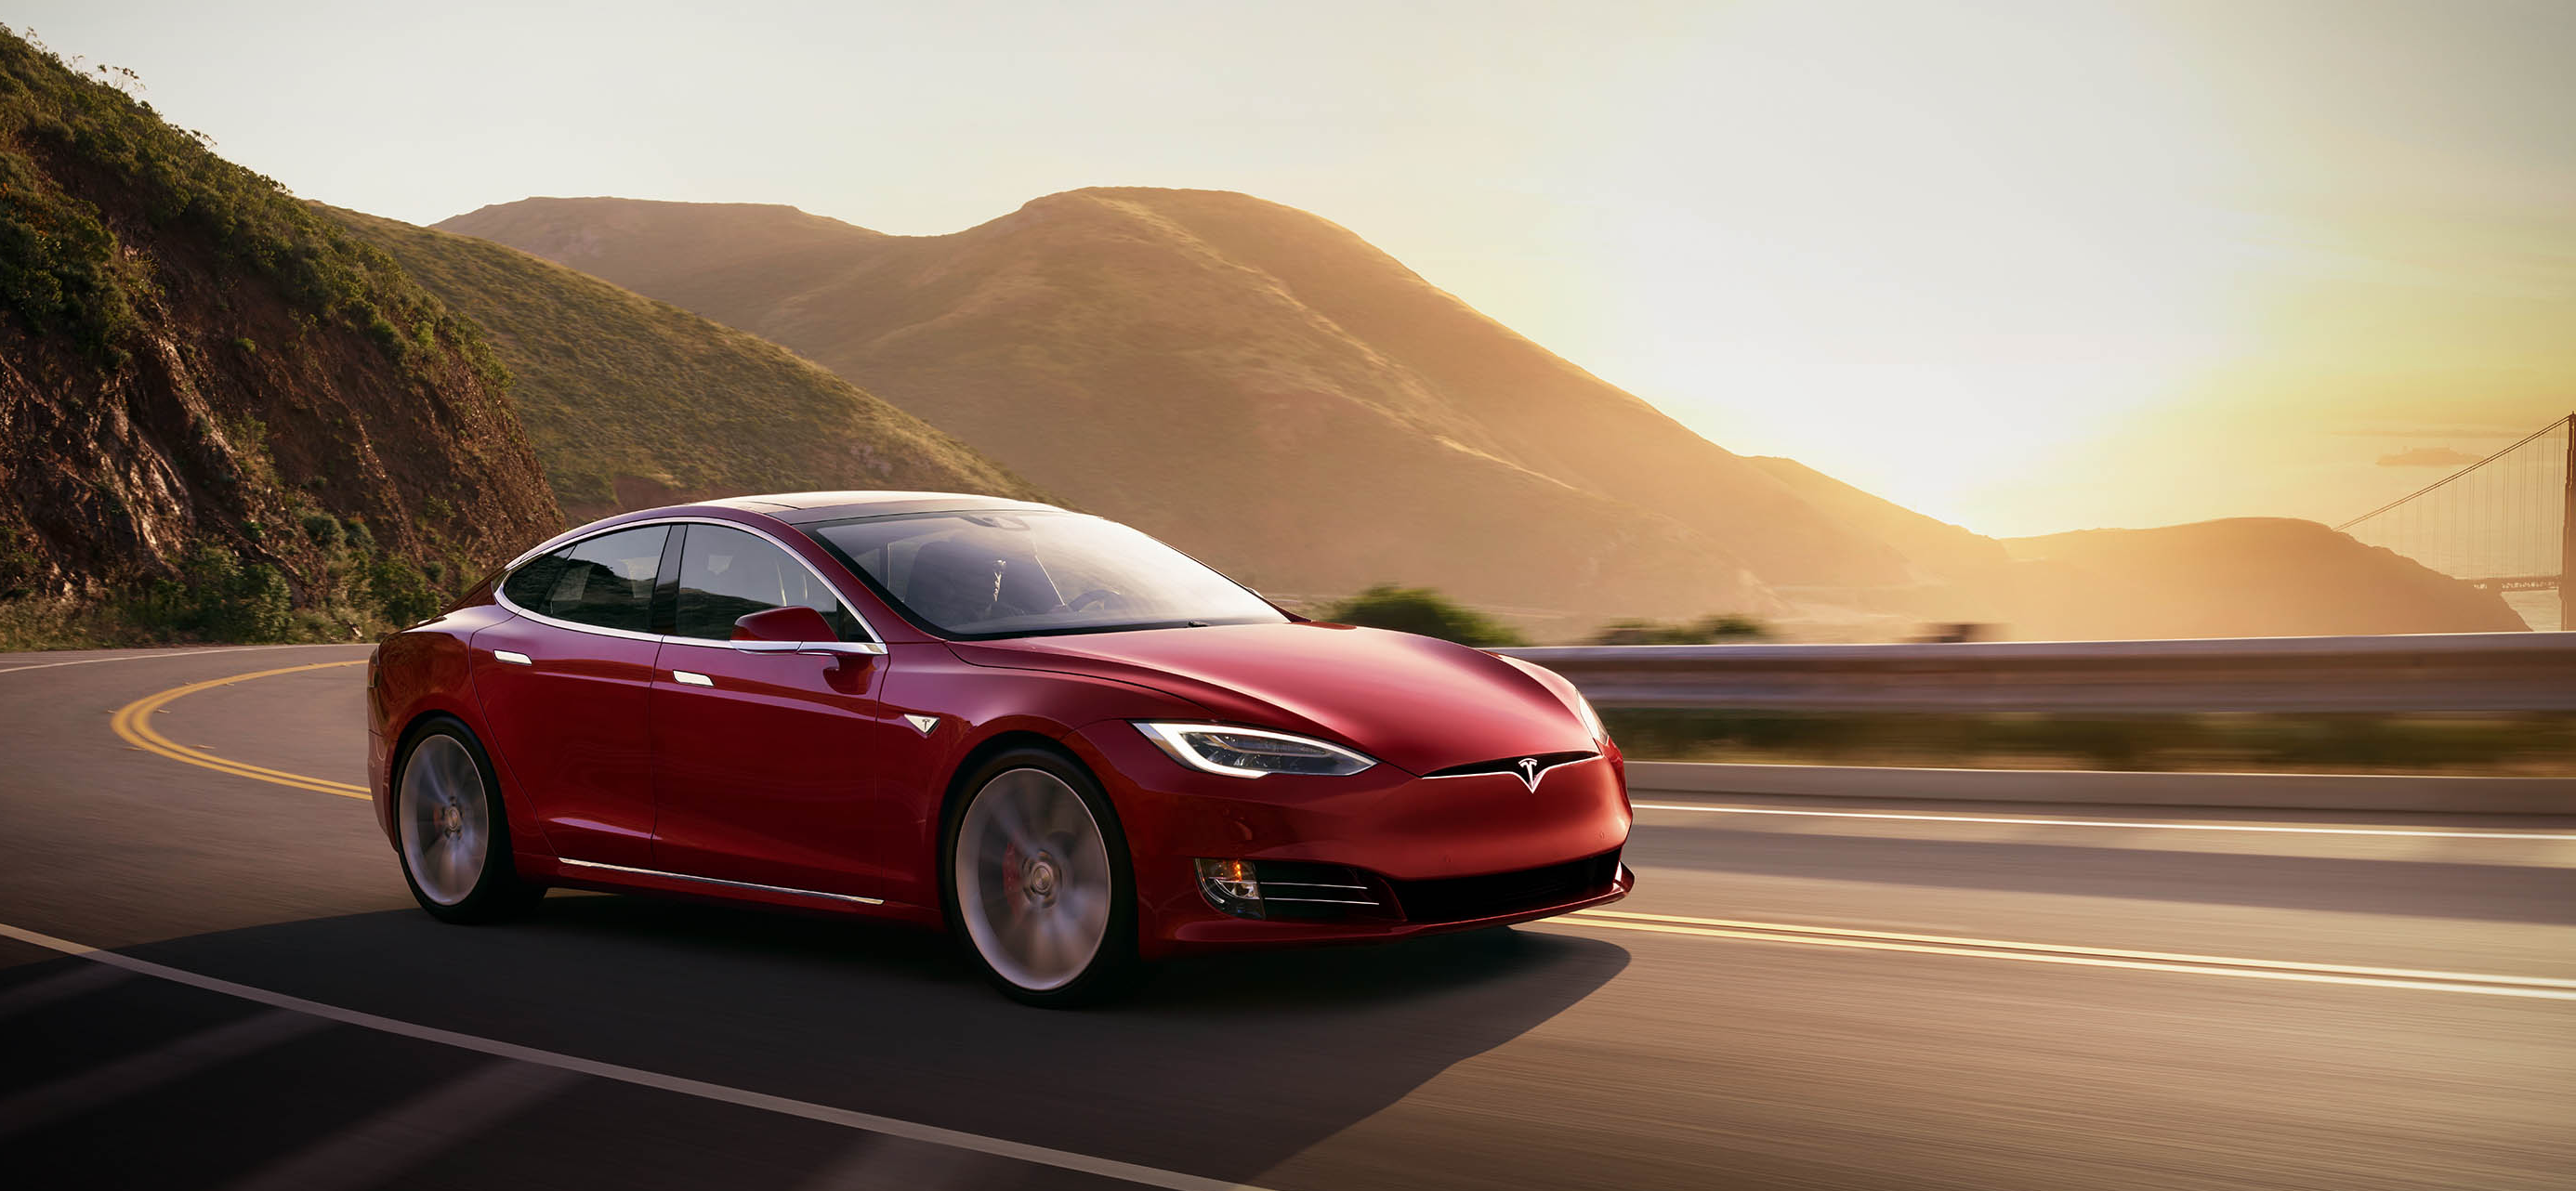 Tesla Model S driving in California Bay Area